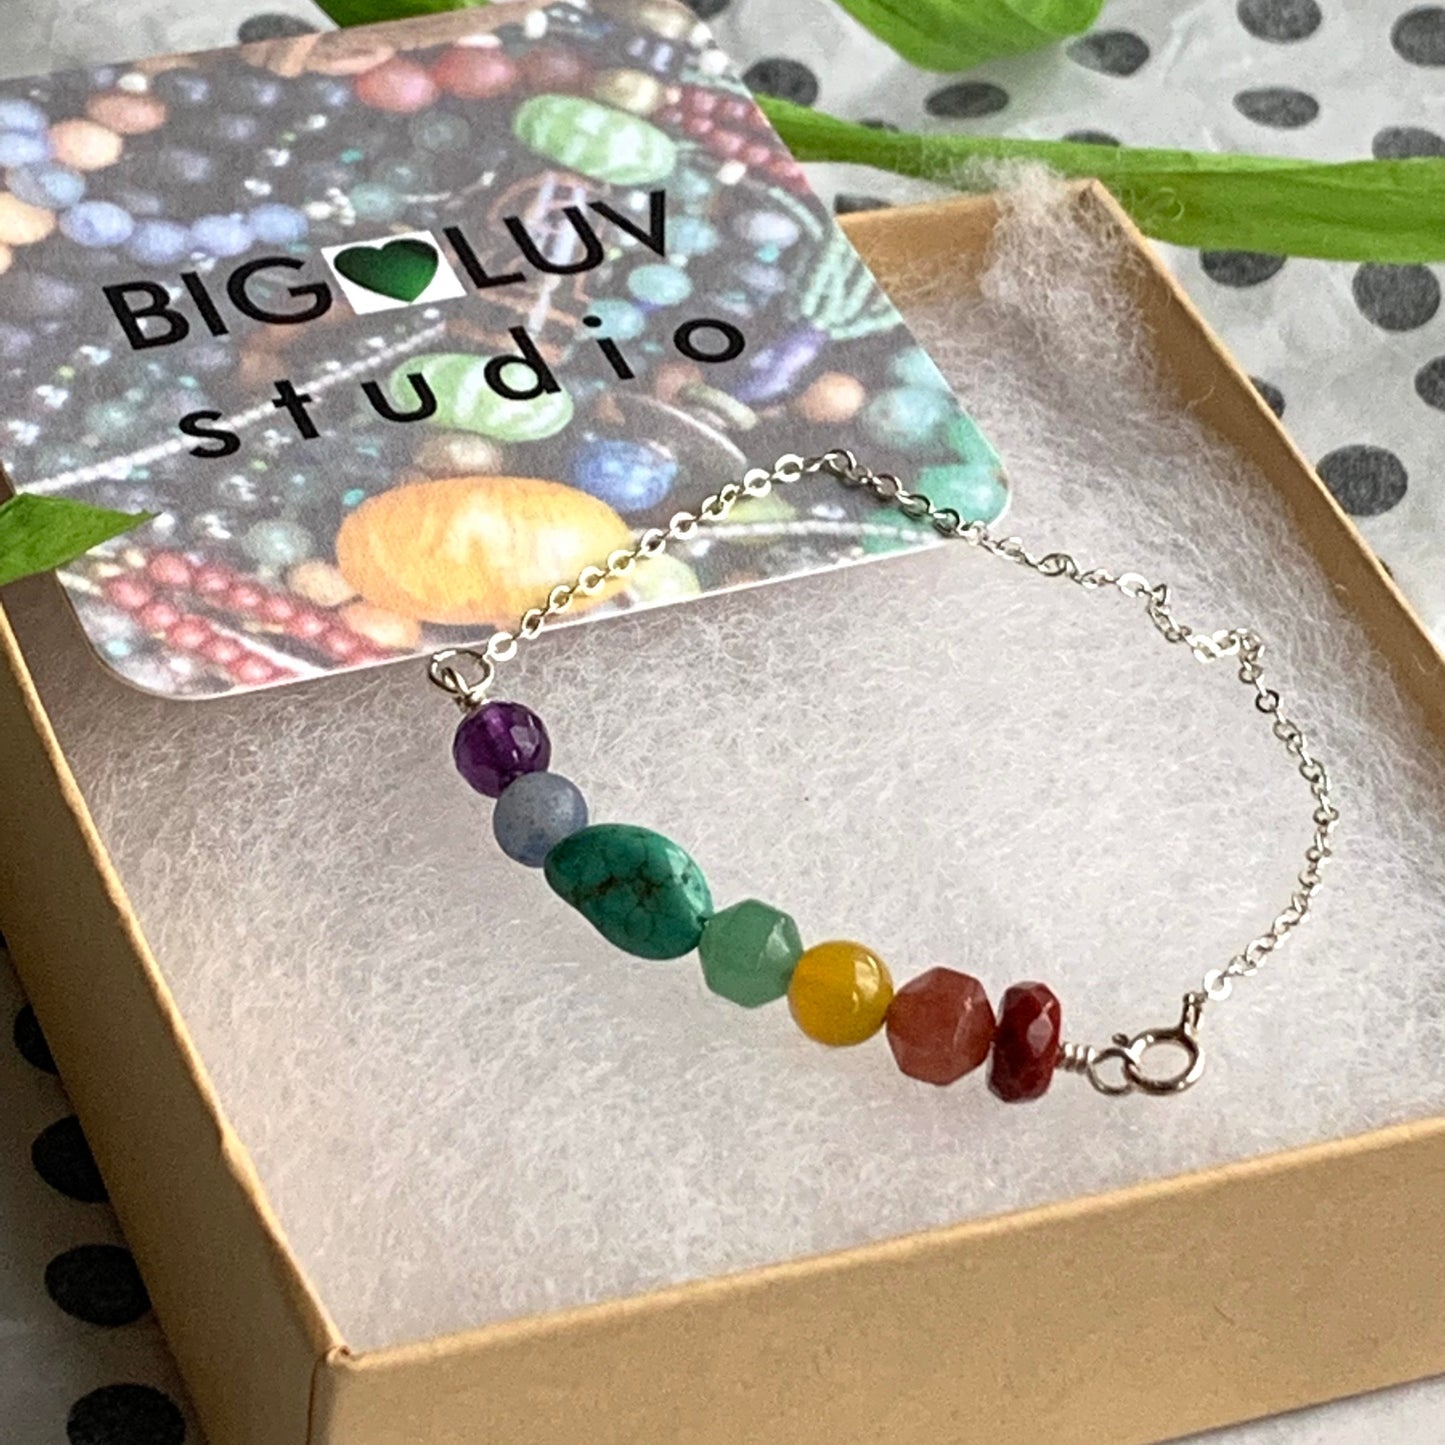 Chakra colors, rainbow, pride gemstone bracelet- sterling silver chain with natural stones - yoga, lgbtq, joy - handmade jewelry -boho chic